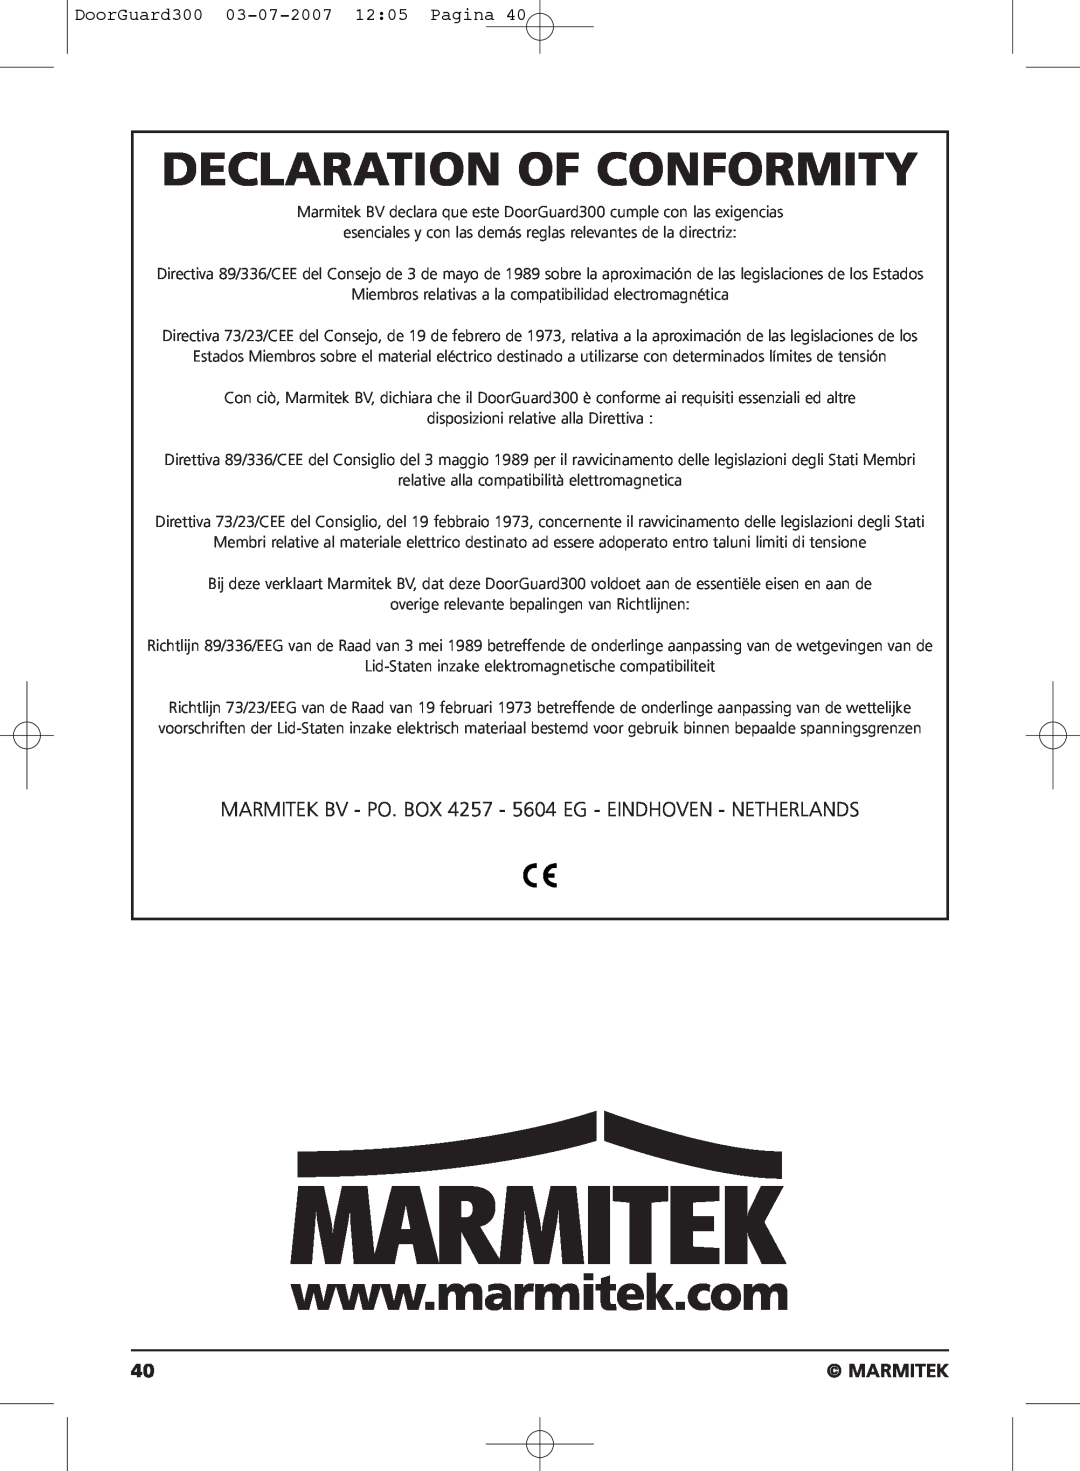 Marmitek DOORGUARD300TM Declaration Of Conformity, MARMITEK BV - PO. BOX 4257 - 5604 EG - EINDHOVEN - NETHERLANDS 